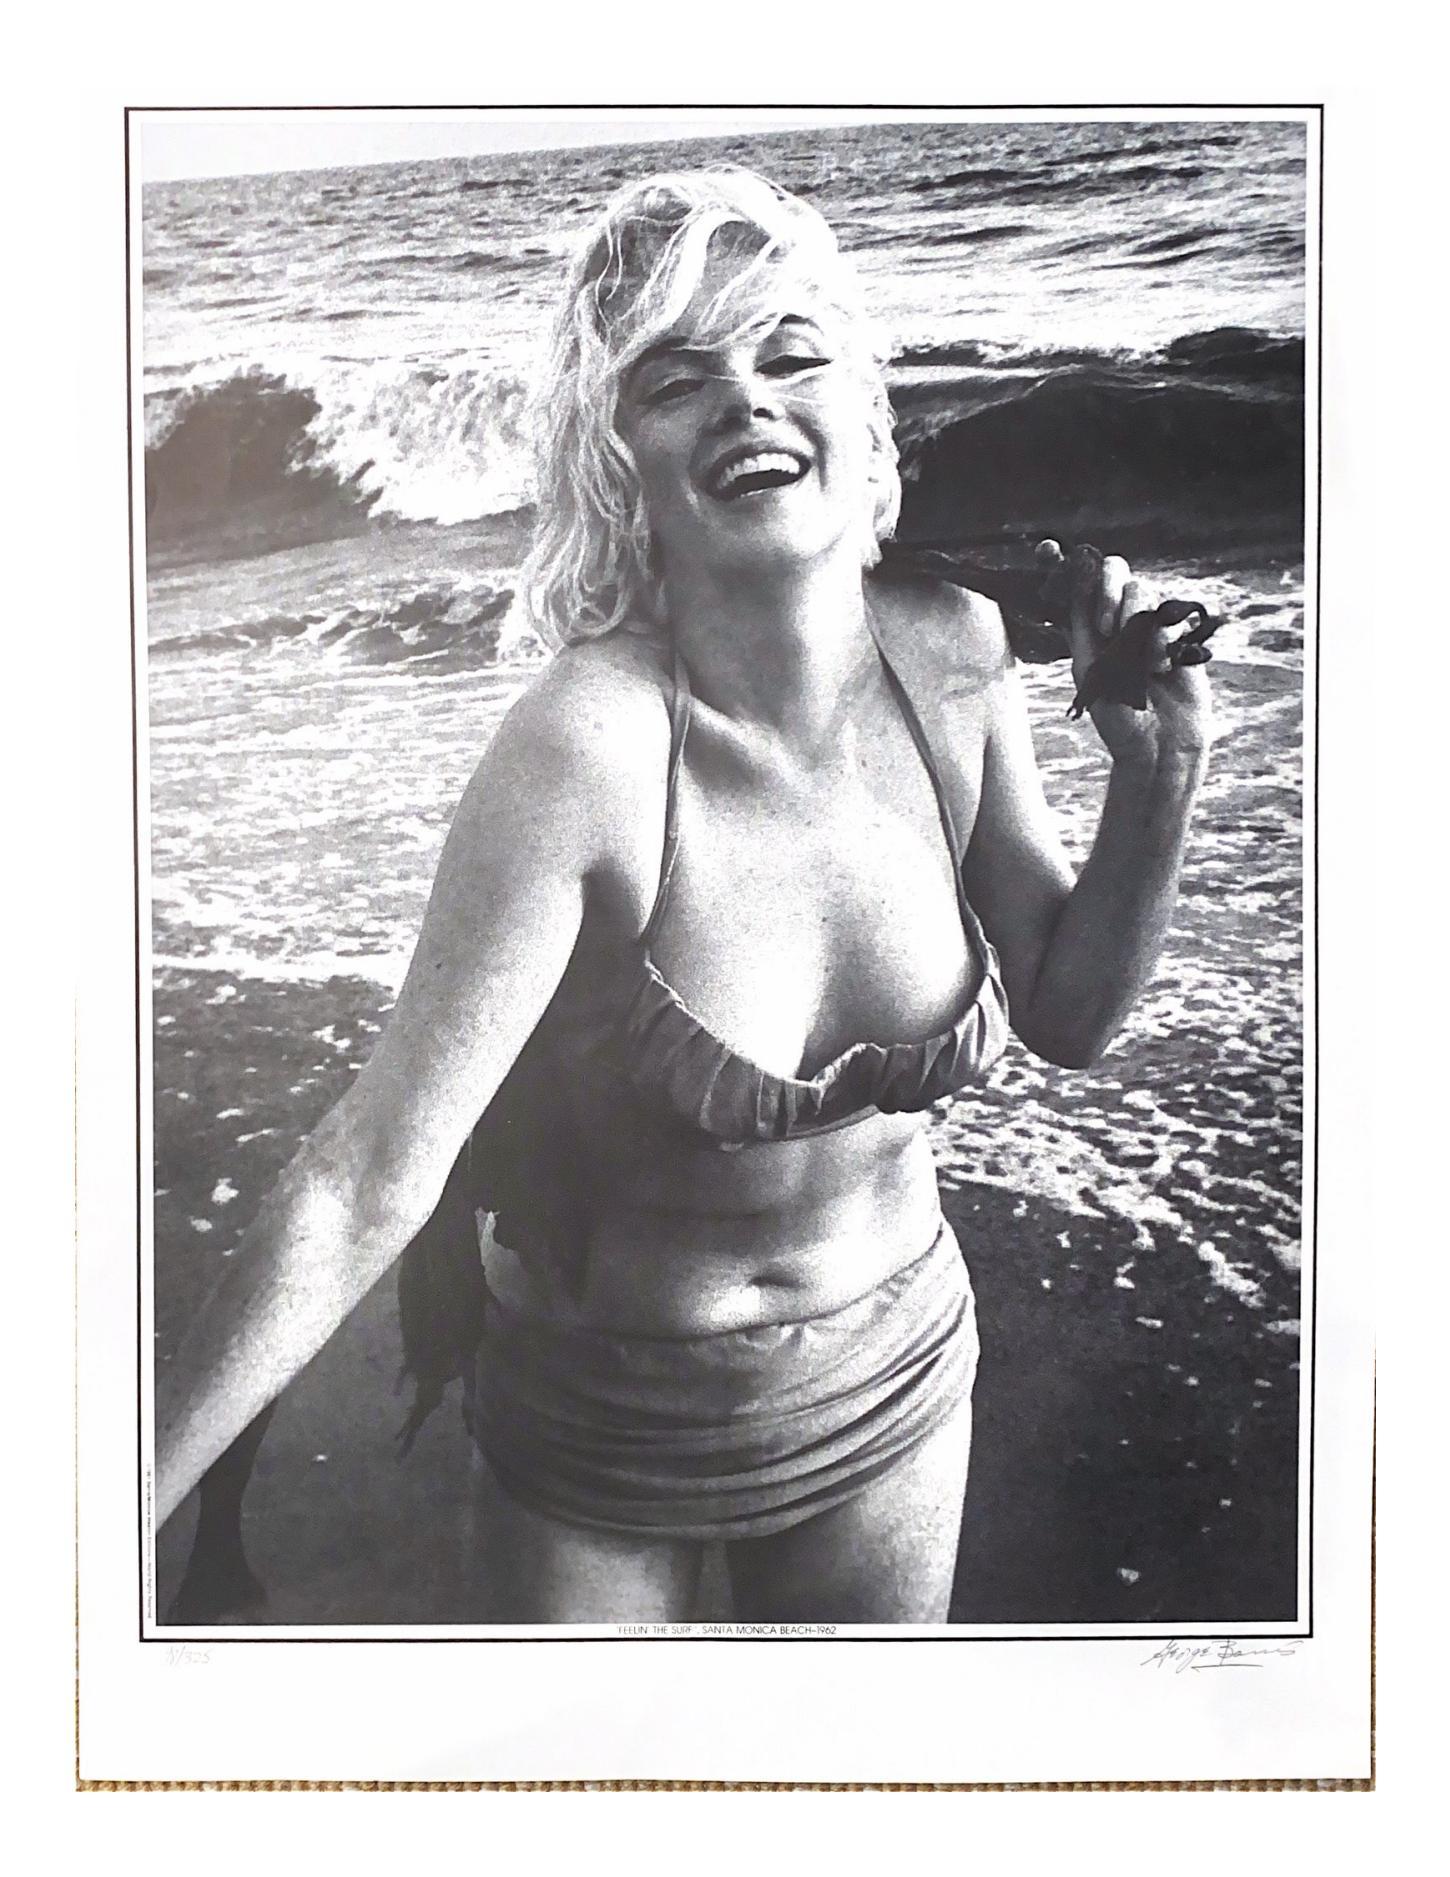 Feelin the Surf, Santa Monica Beach, 1962 by George Barris In Good Condition For Sale In Saint ouen, FR